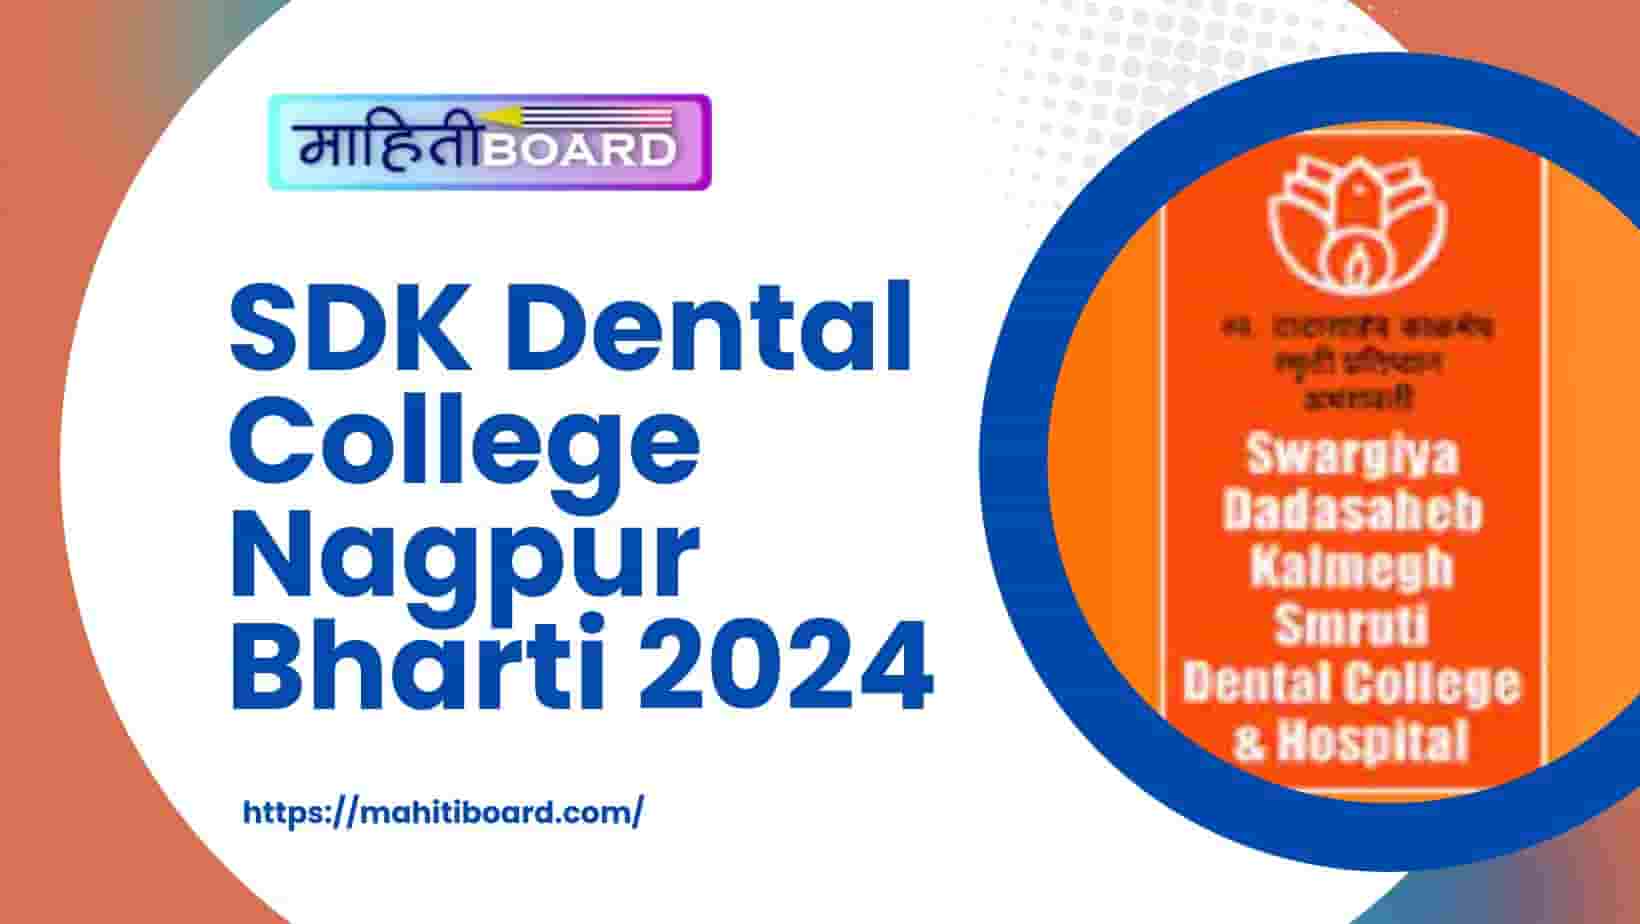 SDK Dental College Nagpur Bharti 2024